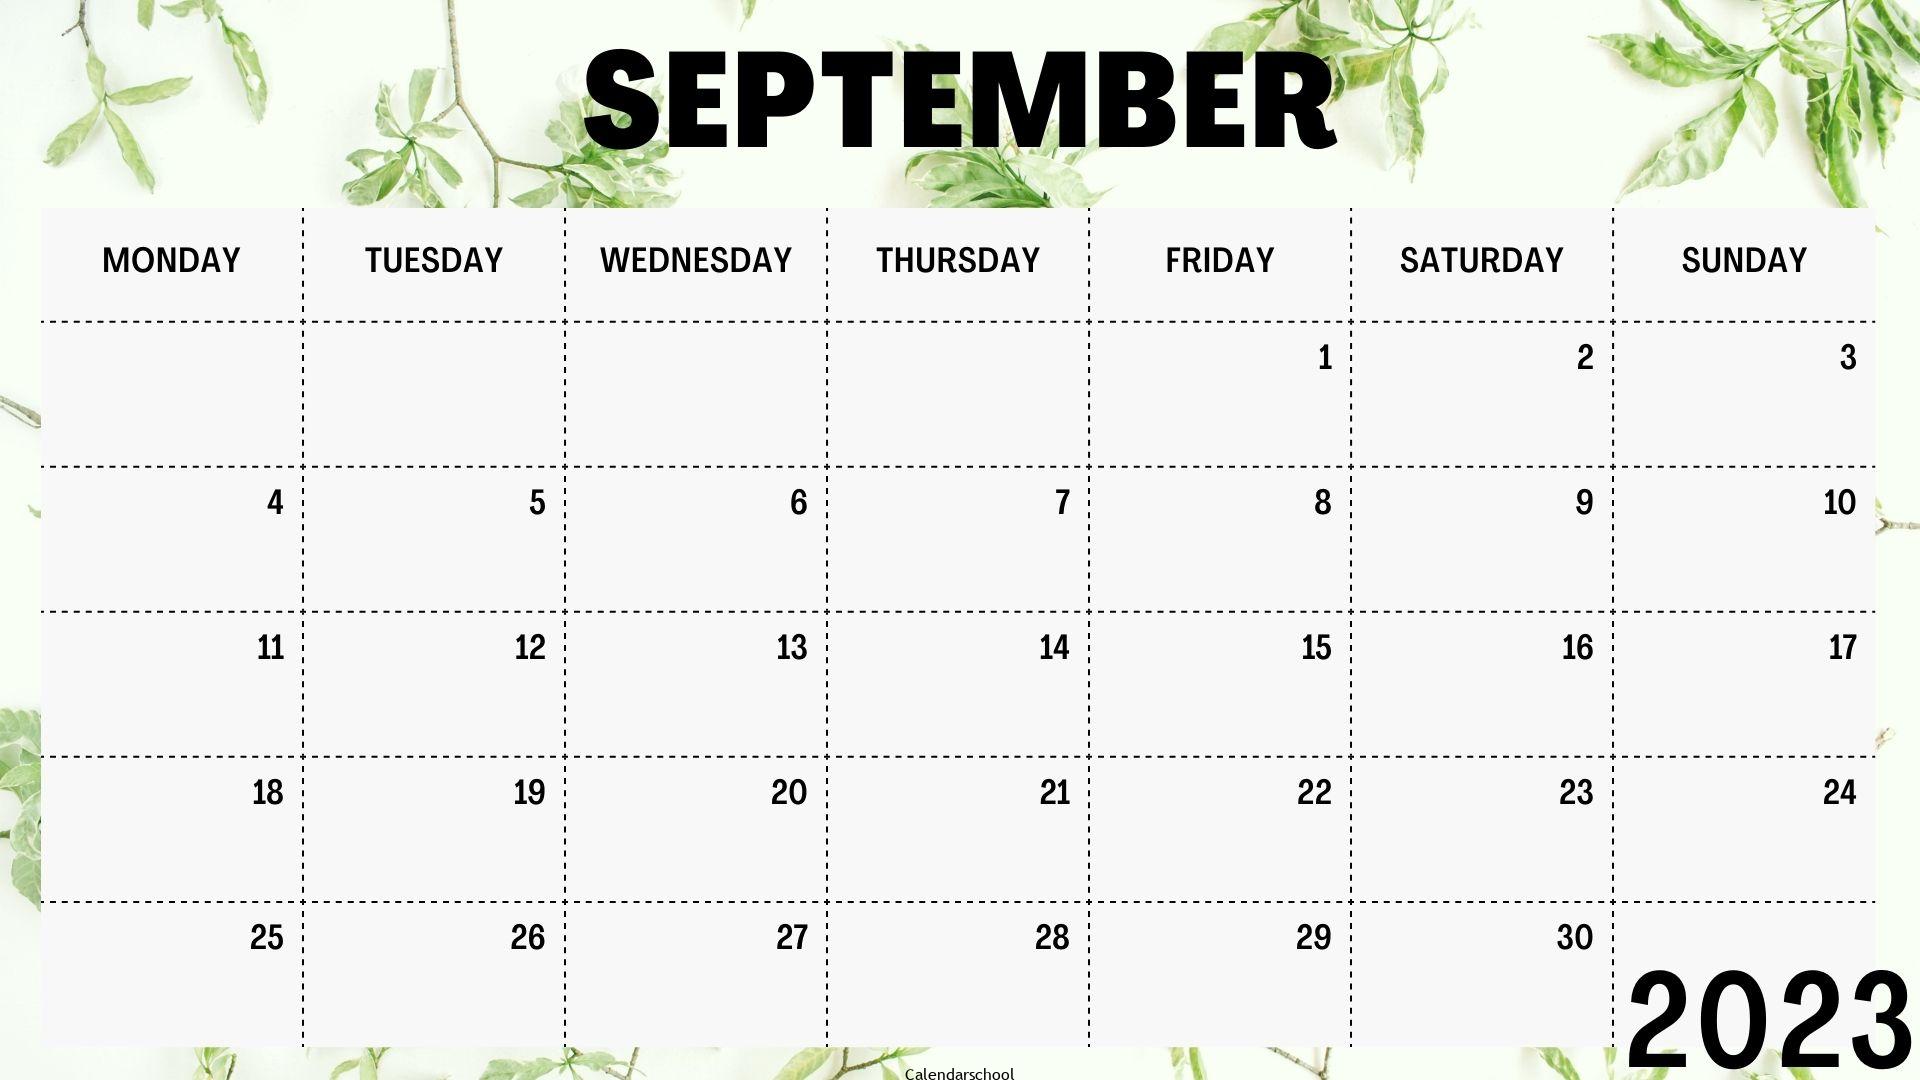 September Calendar 2023 With Jewish Holidays